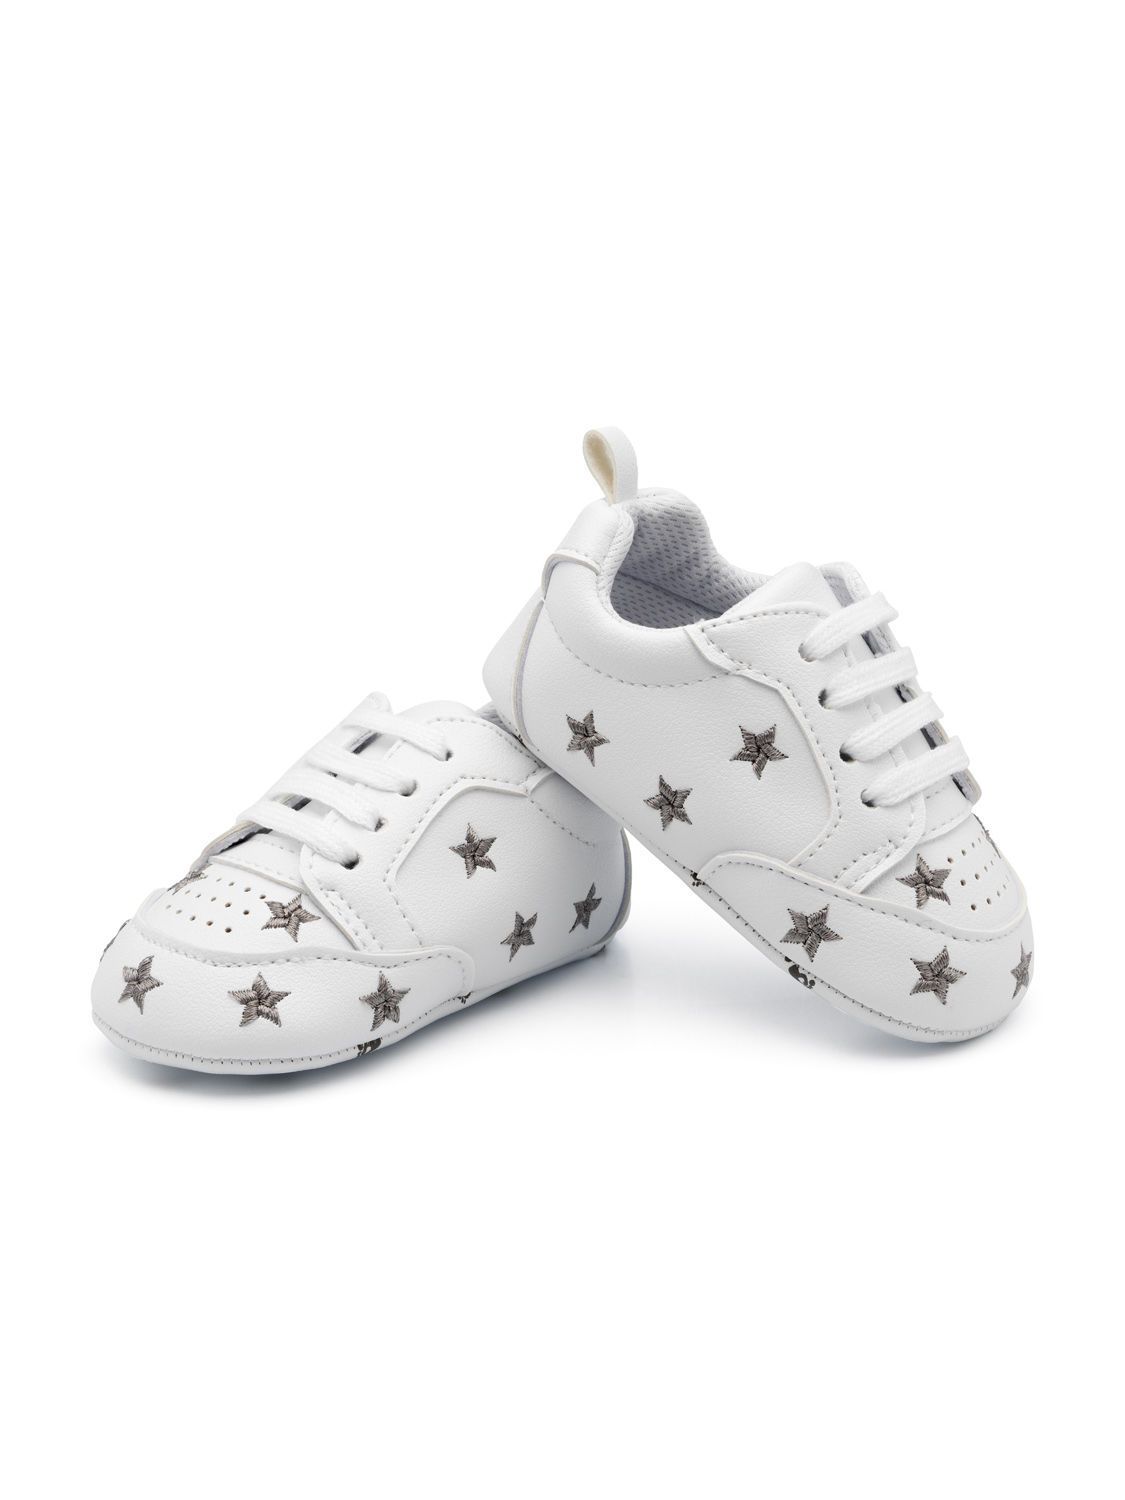 DOOKY Shoes silver stars - Babywear - Sleep - Orchestra